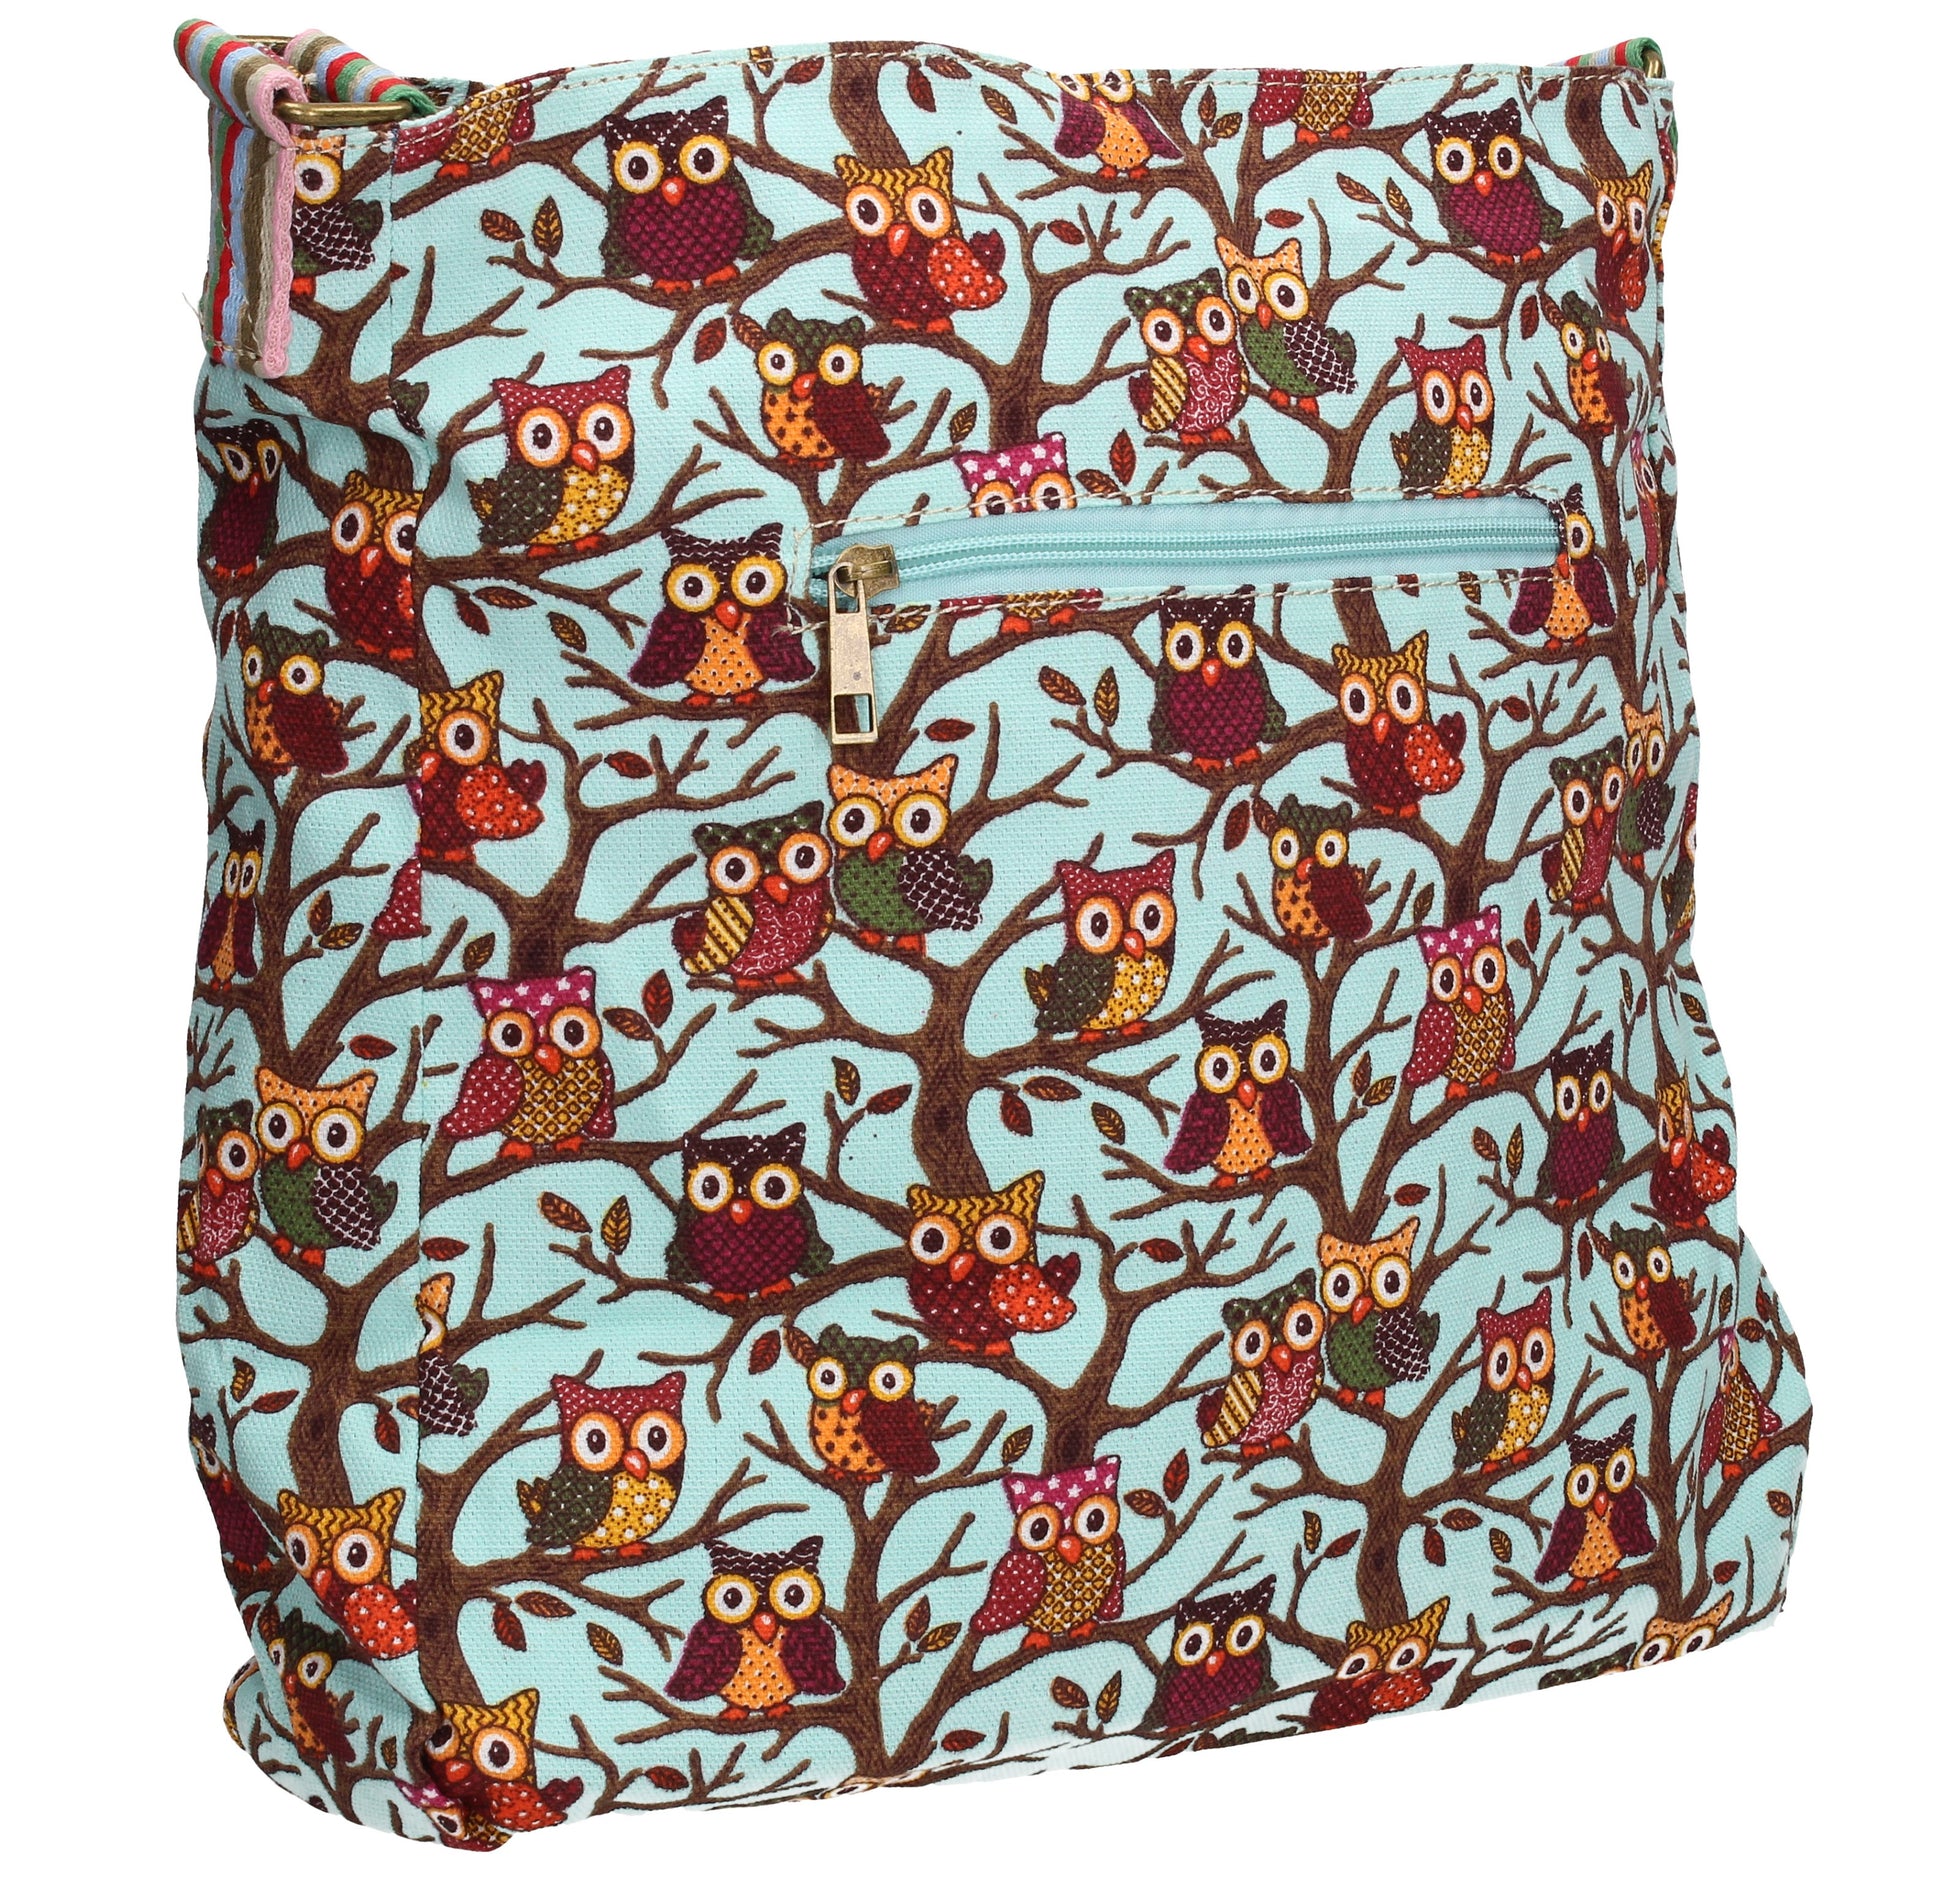 Swanky Swans Classic Tree Owl Print Crossbody Bag in BlueWomens Girls Boys School Crossbody Animal Cute